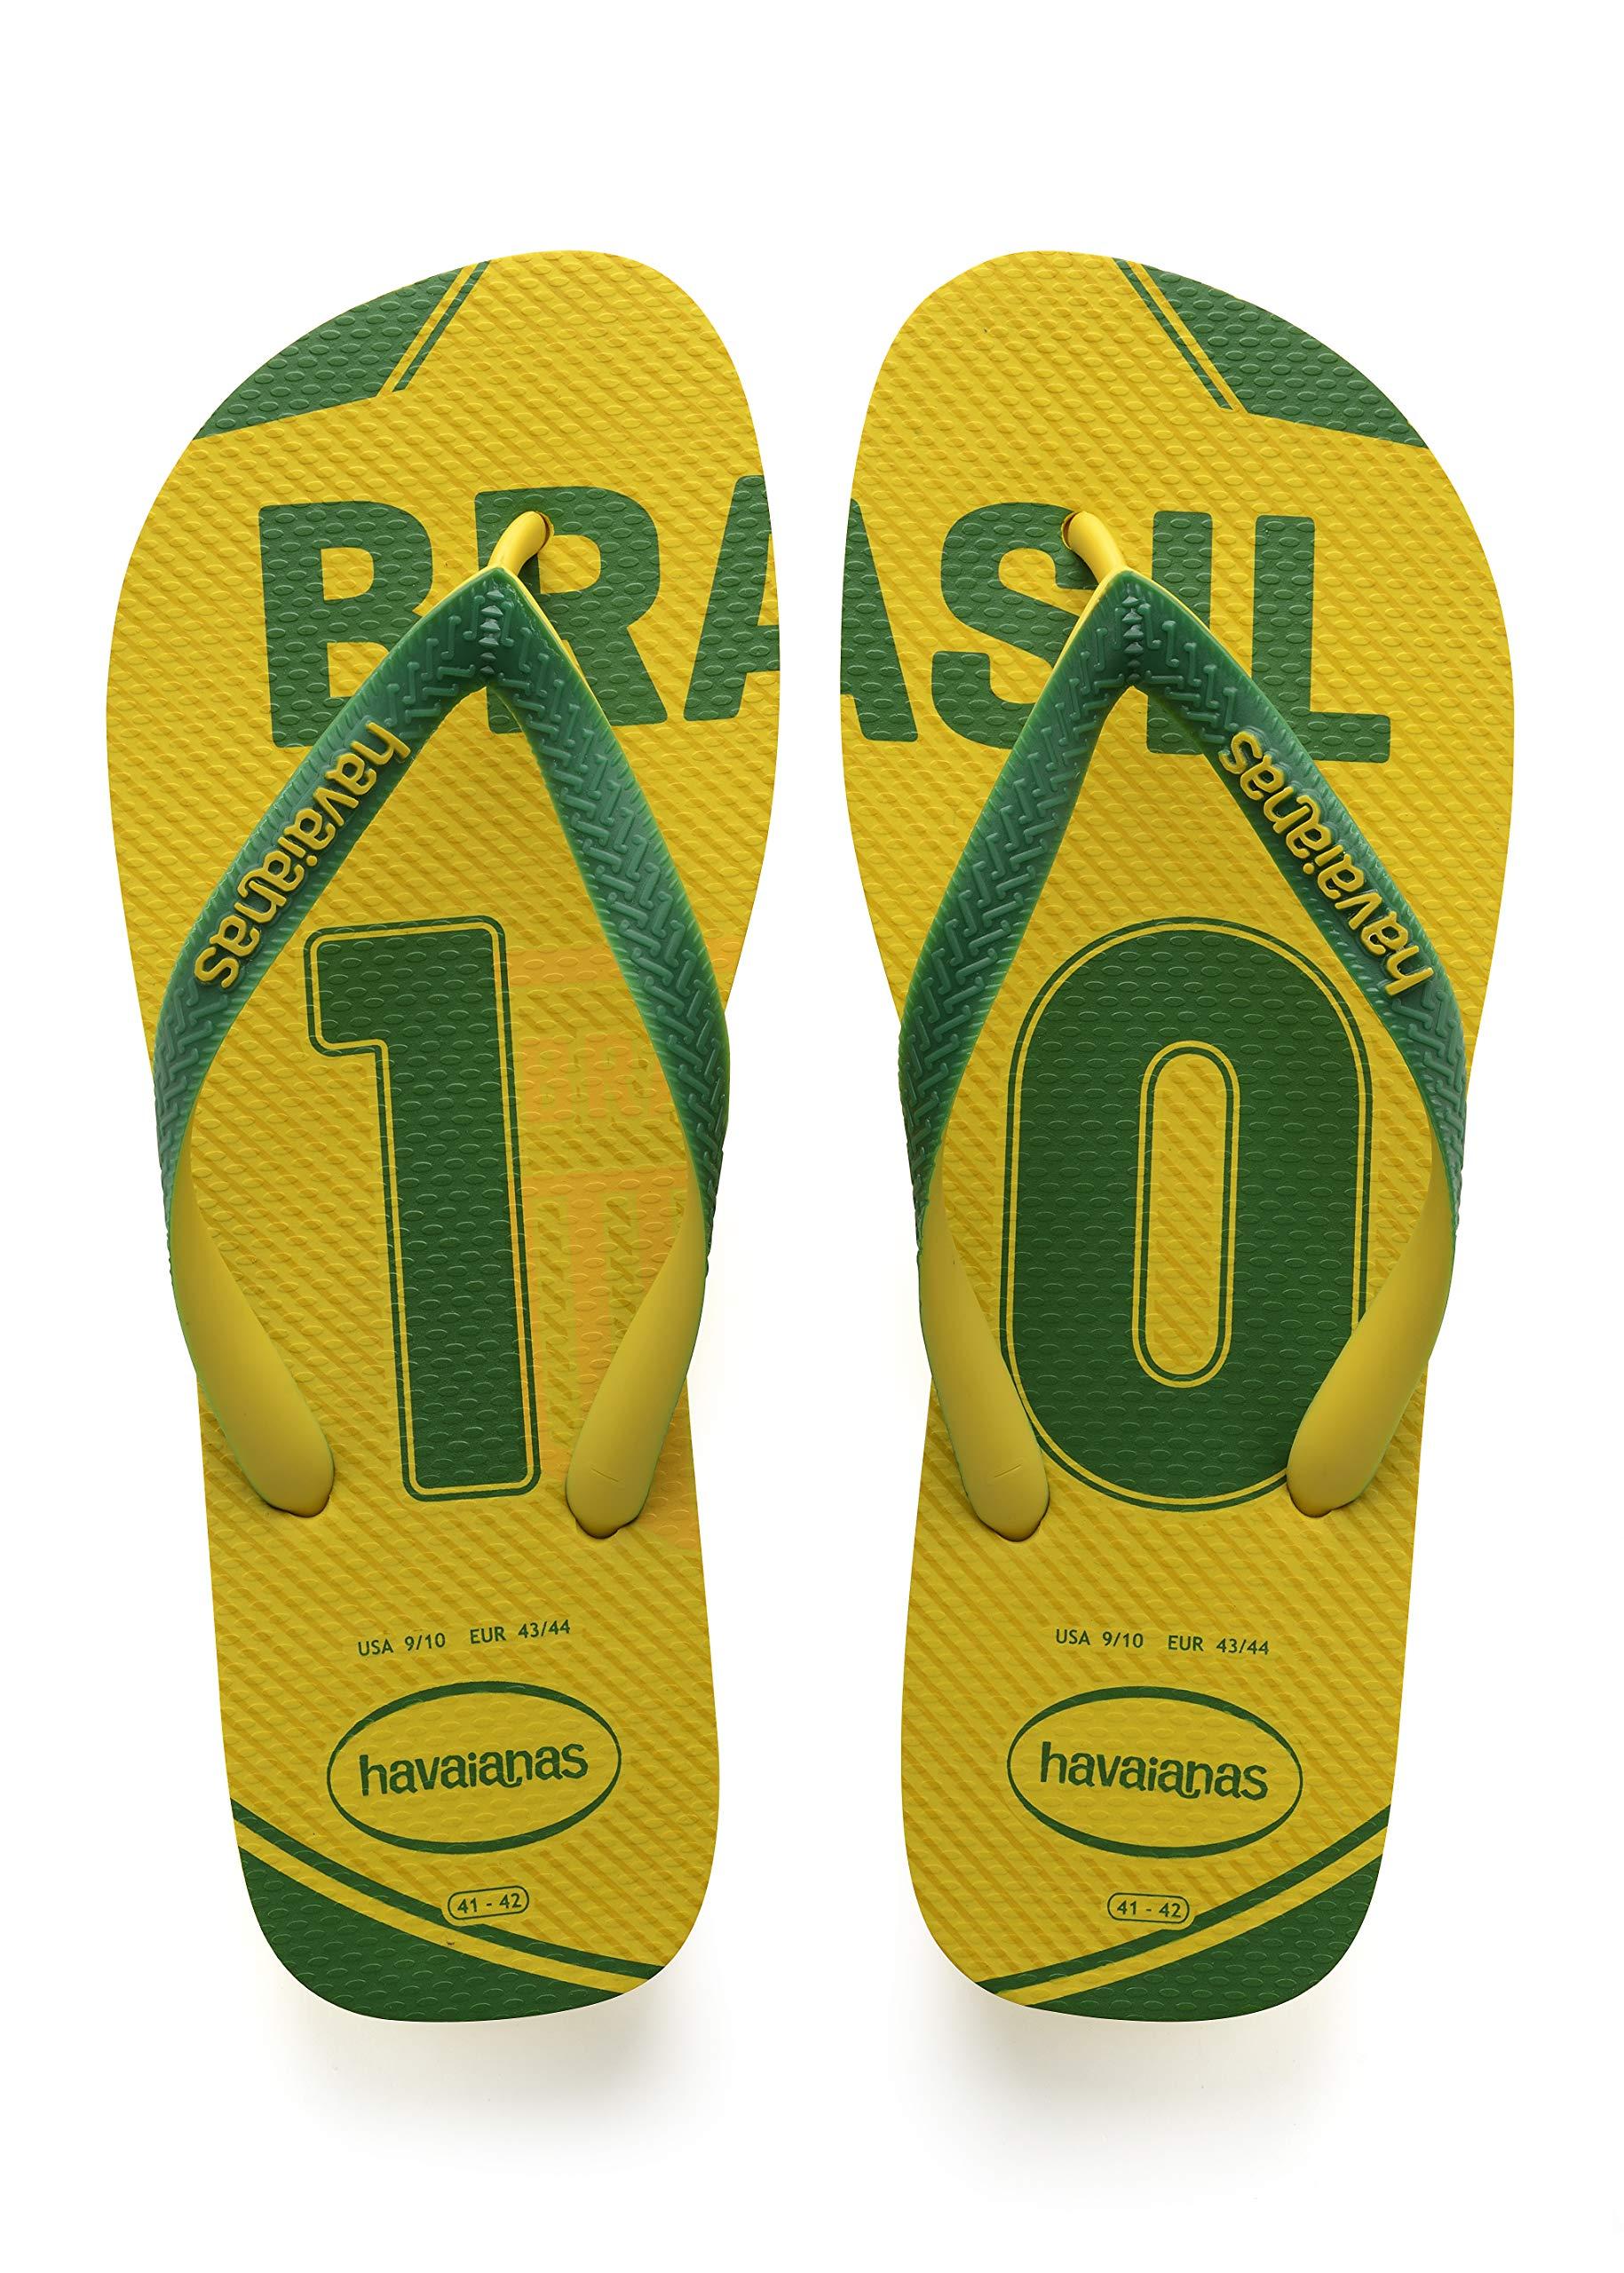 Havaianas Rubber Teams Iii Flip Flop Sandal in Yellow/Green (Yellow) - Lyst